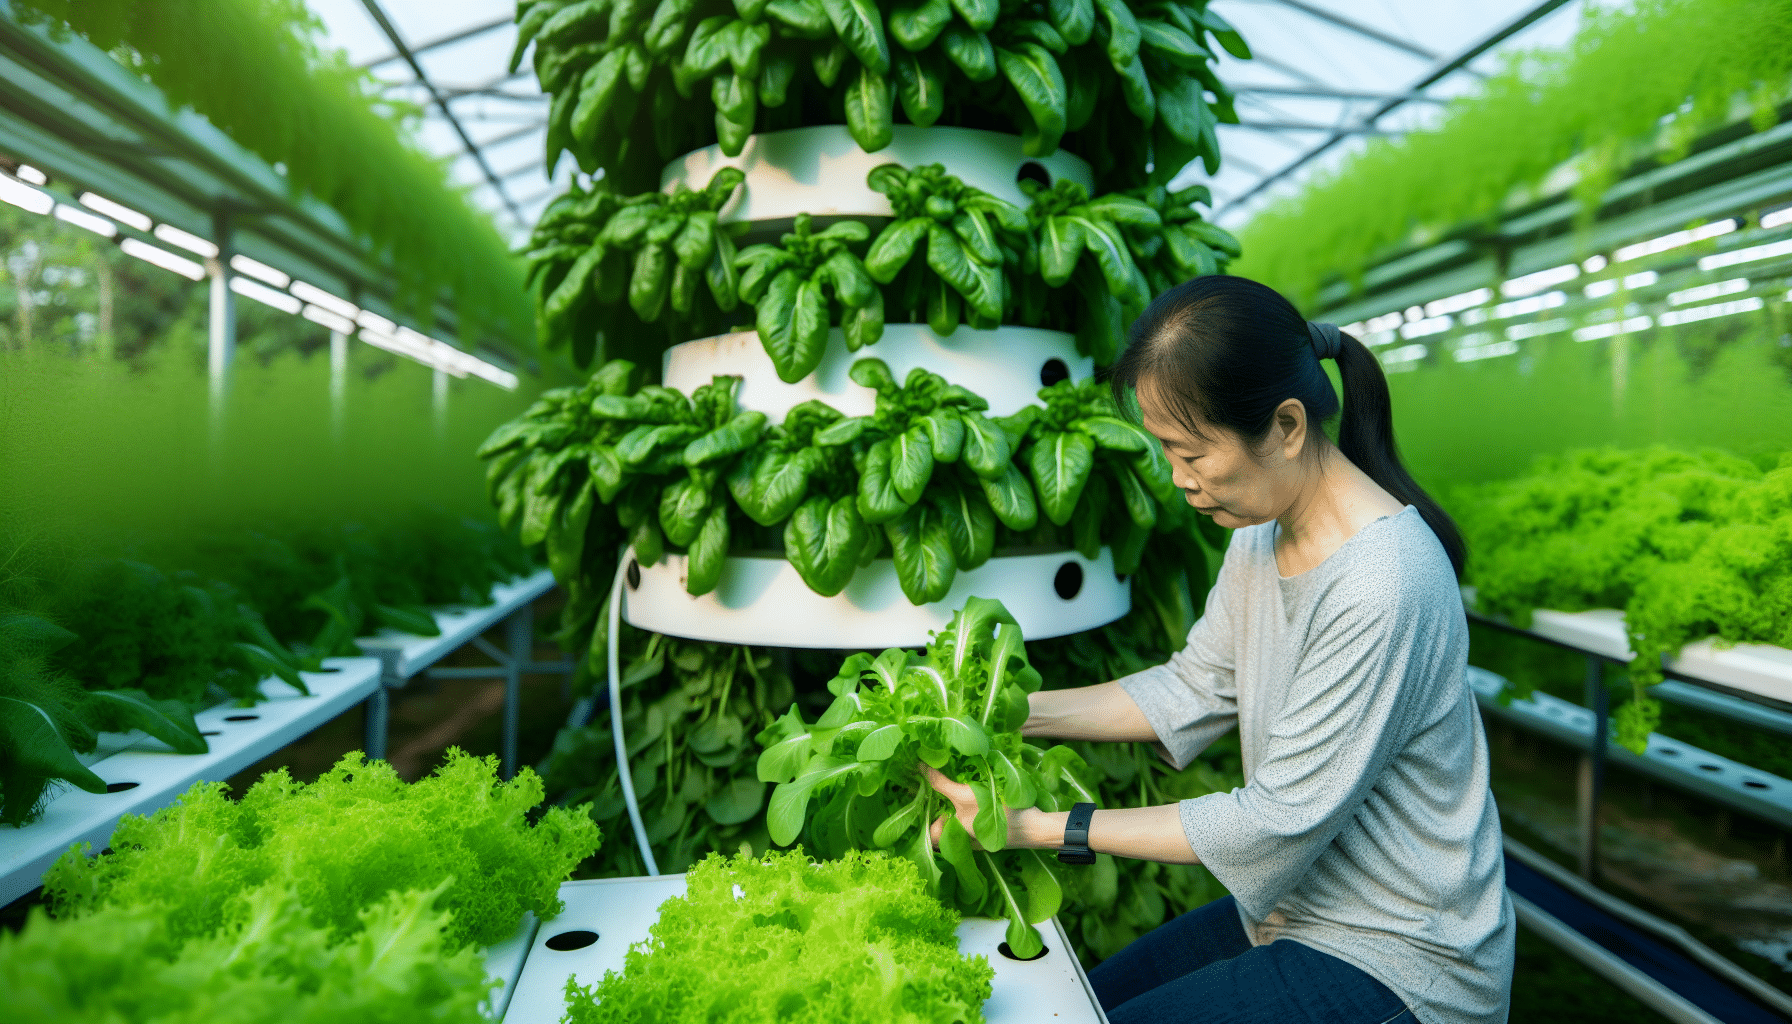 Harvesting fresh leafy greens from hydroponic garden tower (Illustration)